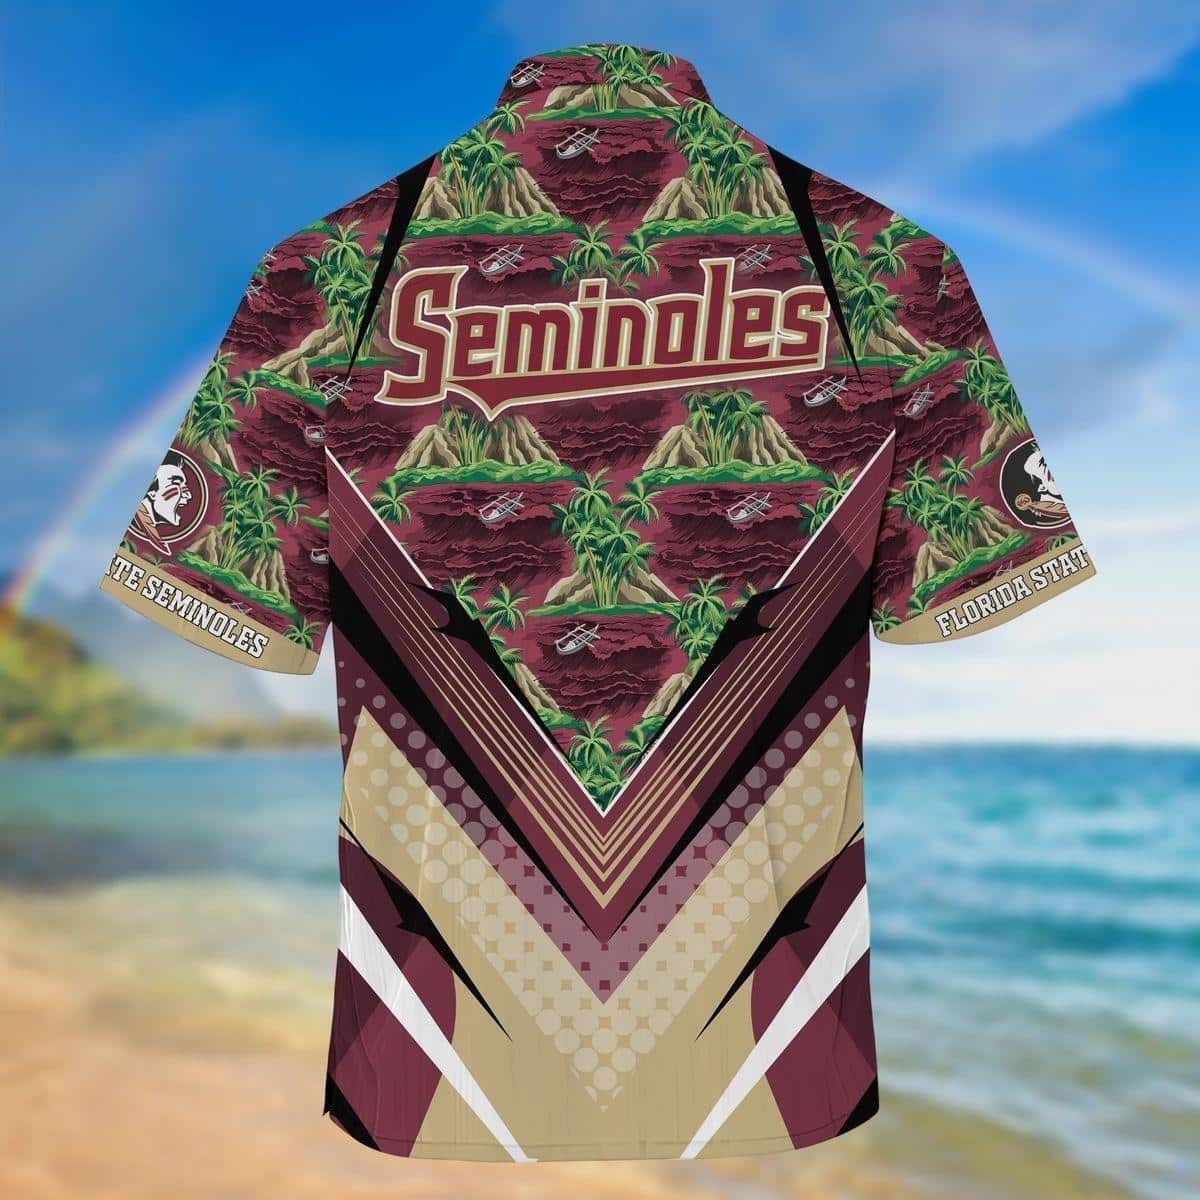 Oakland A's Sea Island Pattern Hawaiian Shirt And Shorts Summer Gift For  Athletics Jersey Baseball